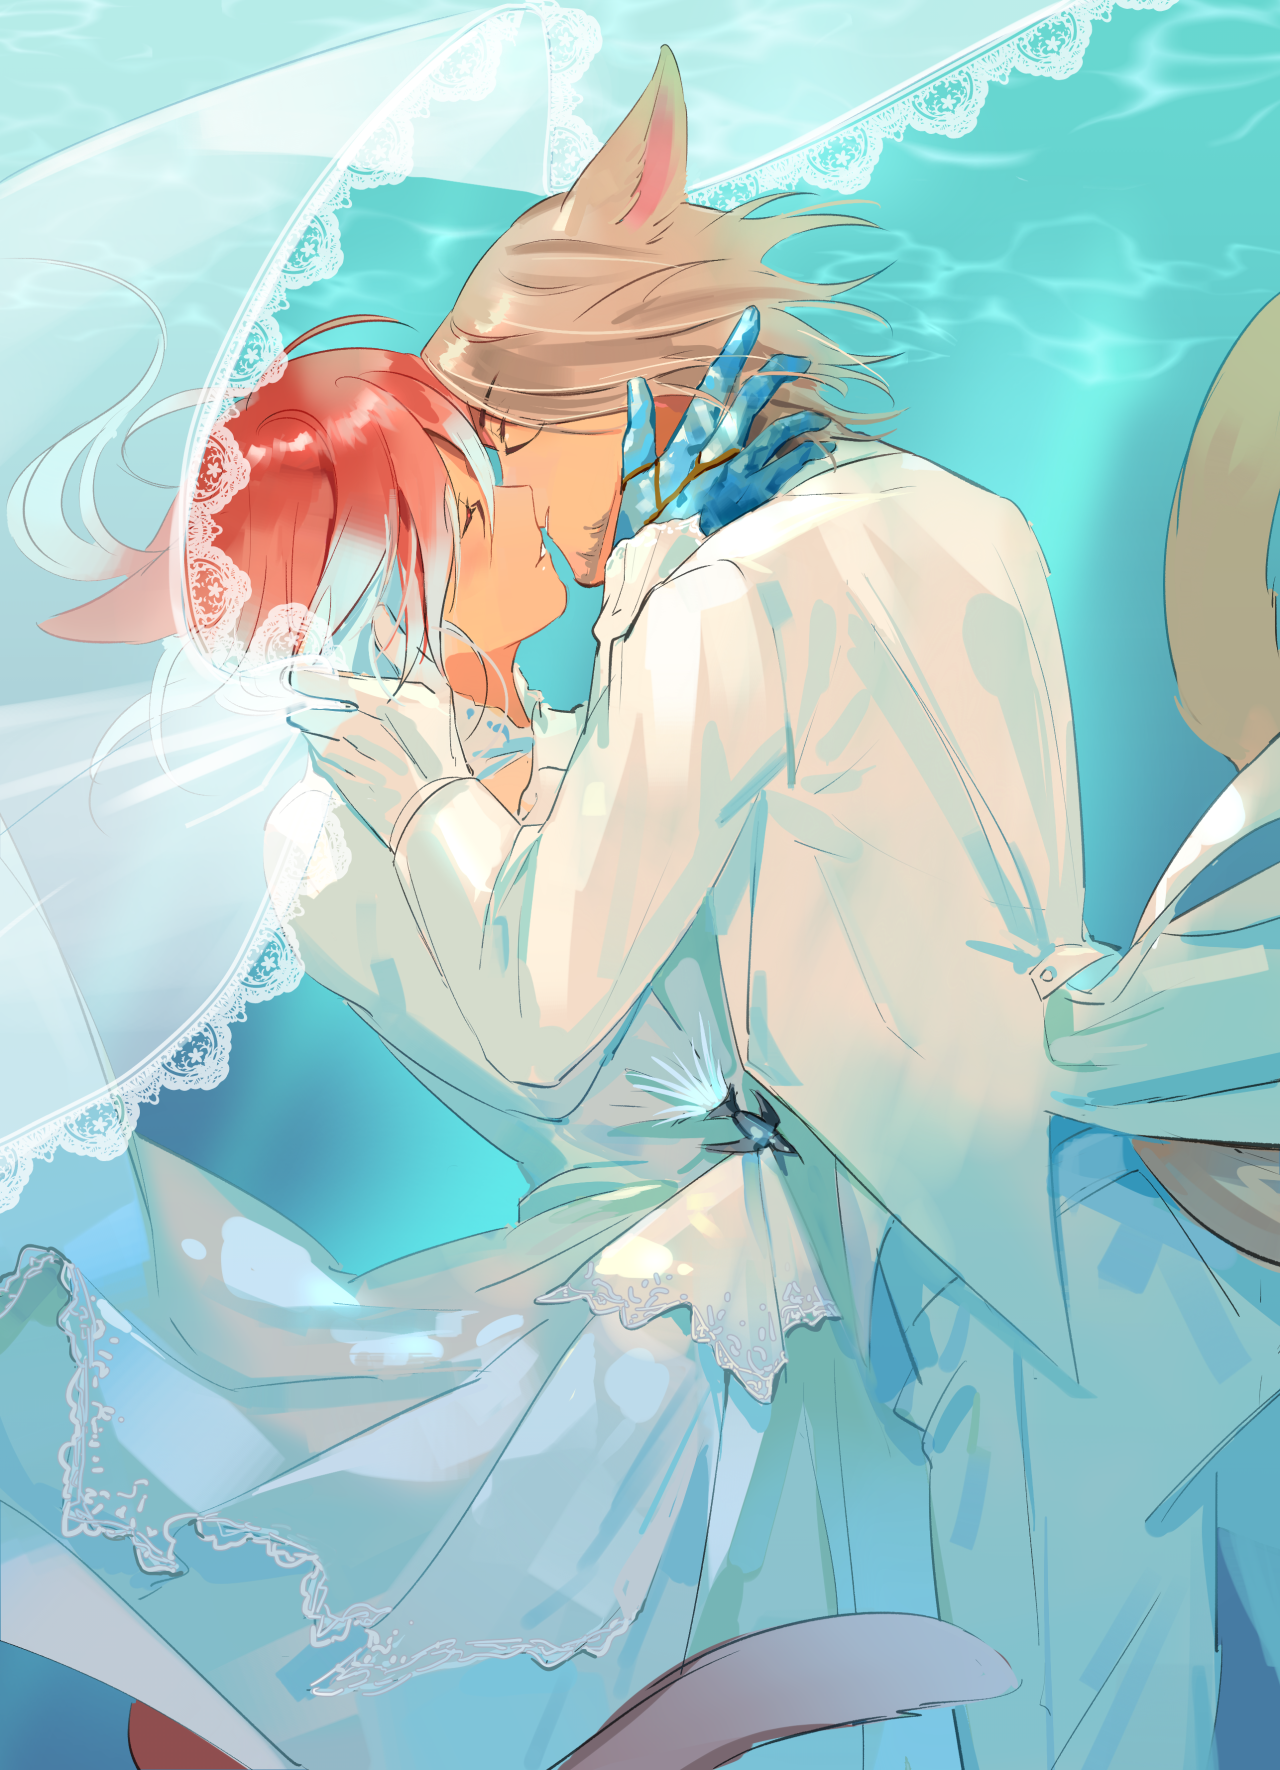 TK — underwater kiss